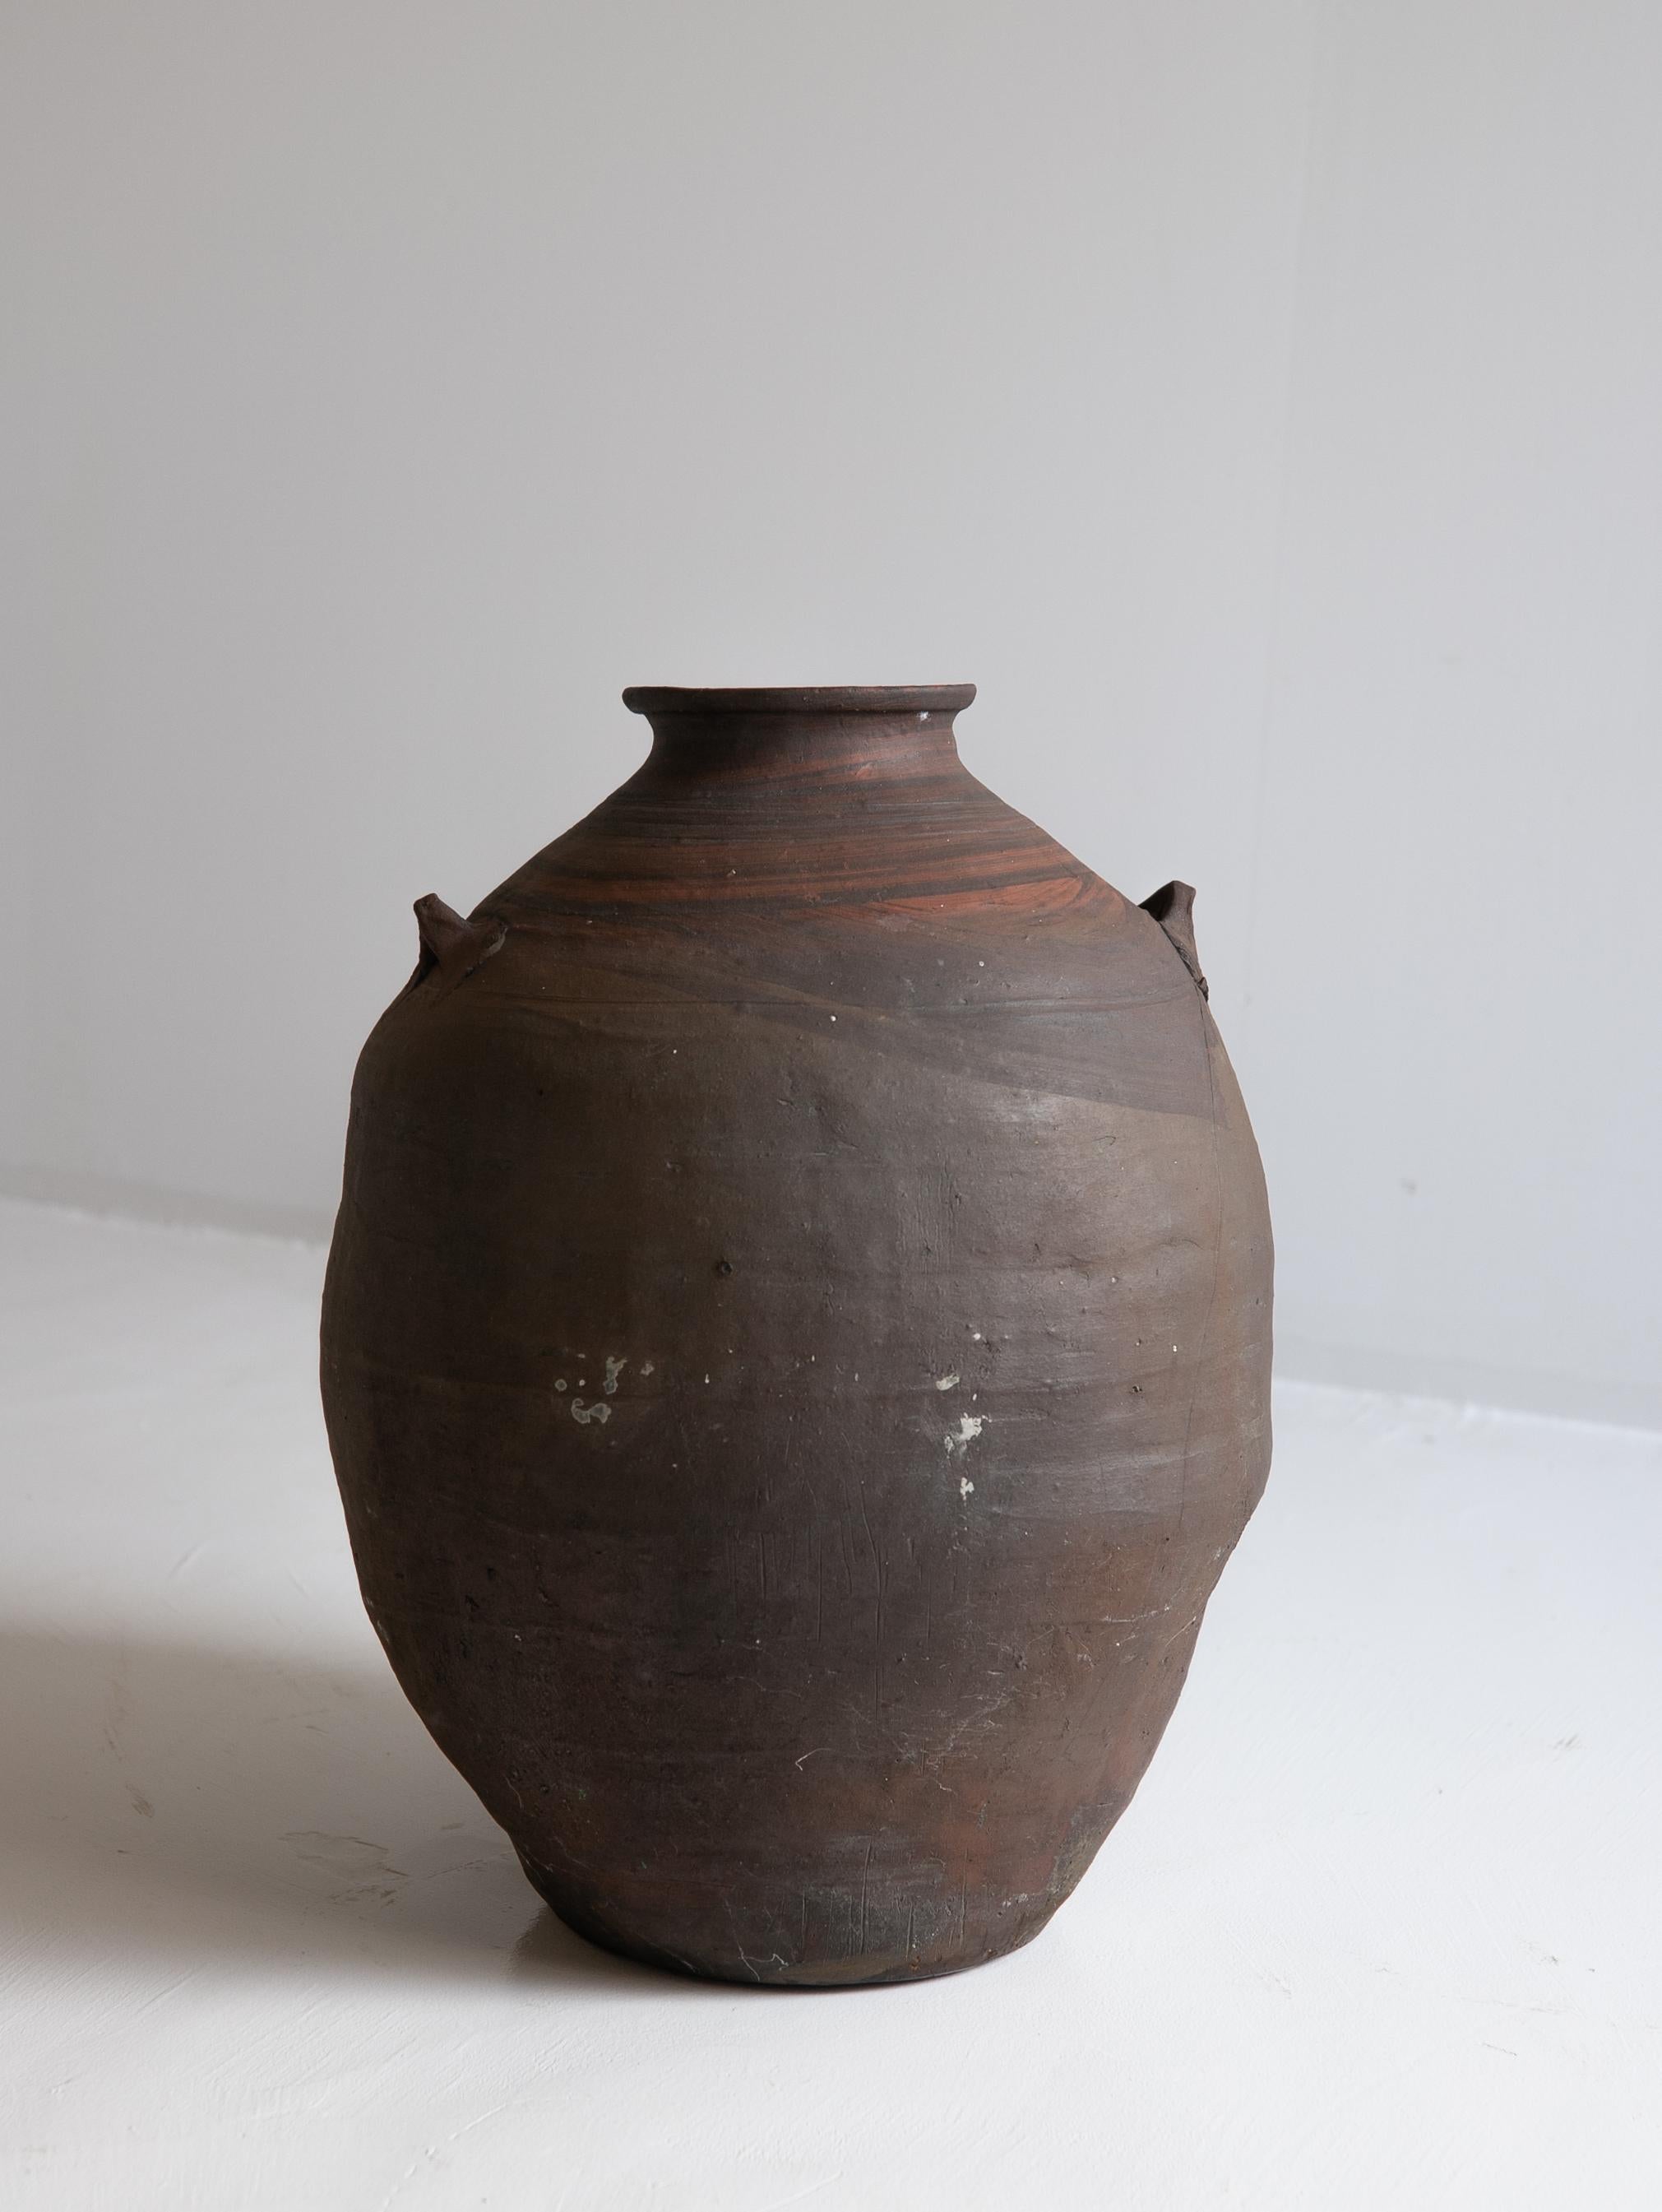 Hand-Crafted Japanese Antique Jar / 1900s / Atmosphere Cool Vase / Wabisabi Art / Mingei For Sale